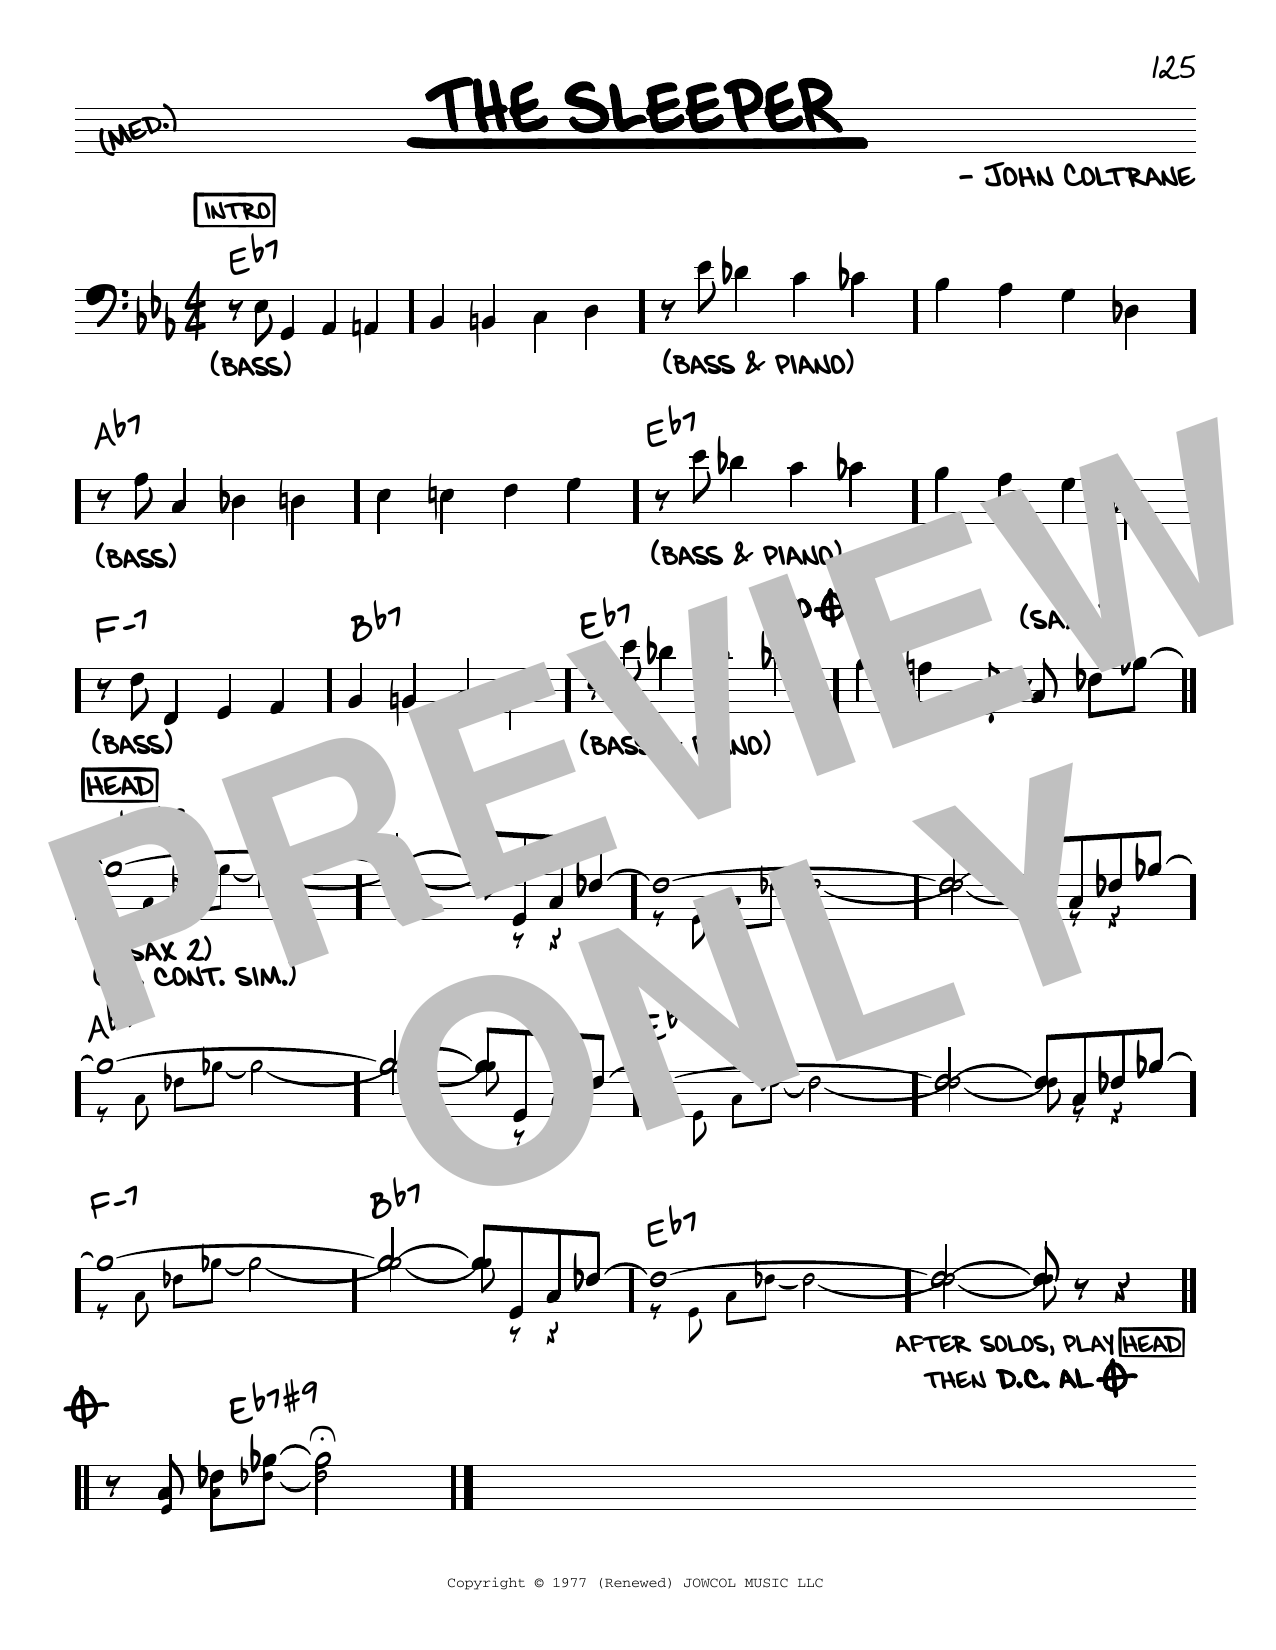 Download John Coltrane The Sleeper Sheet Music